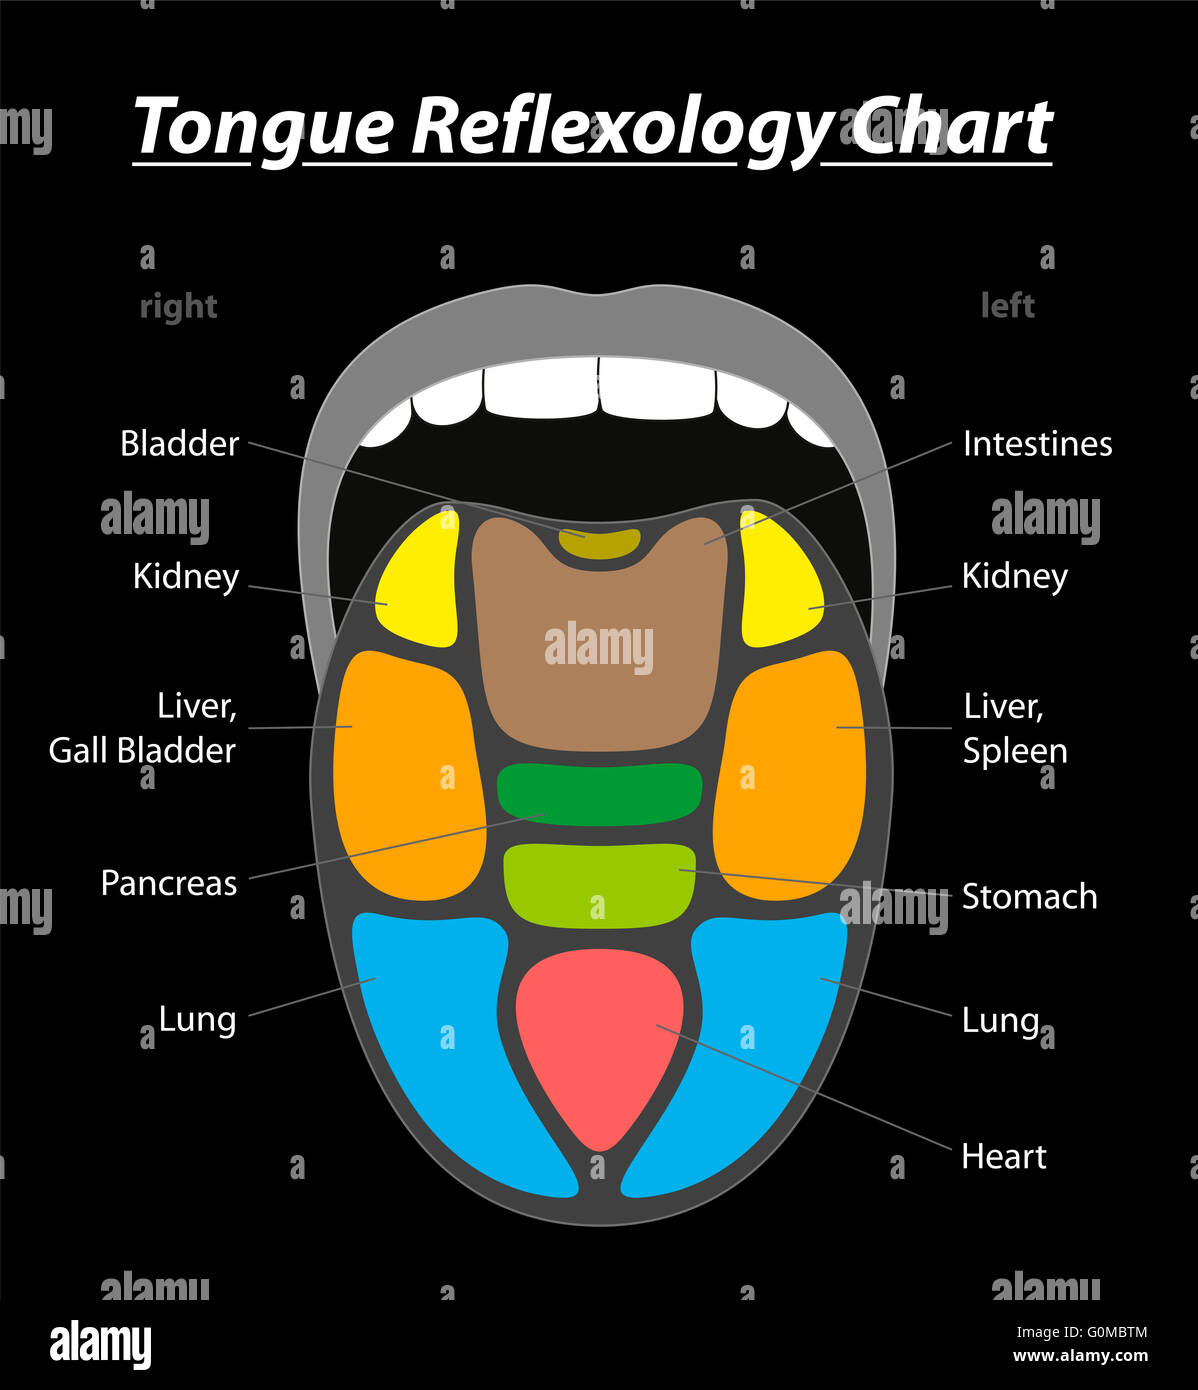 Tongue diagnosis reflexology chart with areas of corresponding internal organs. Illustration on black background. Stock Photo